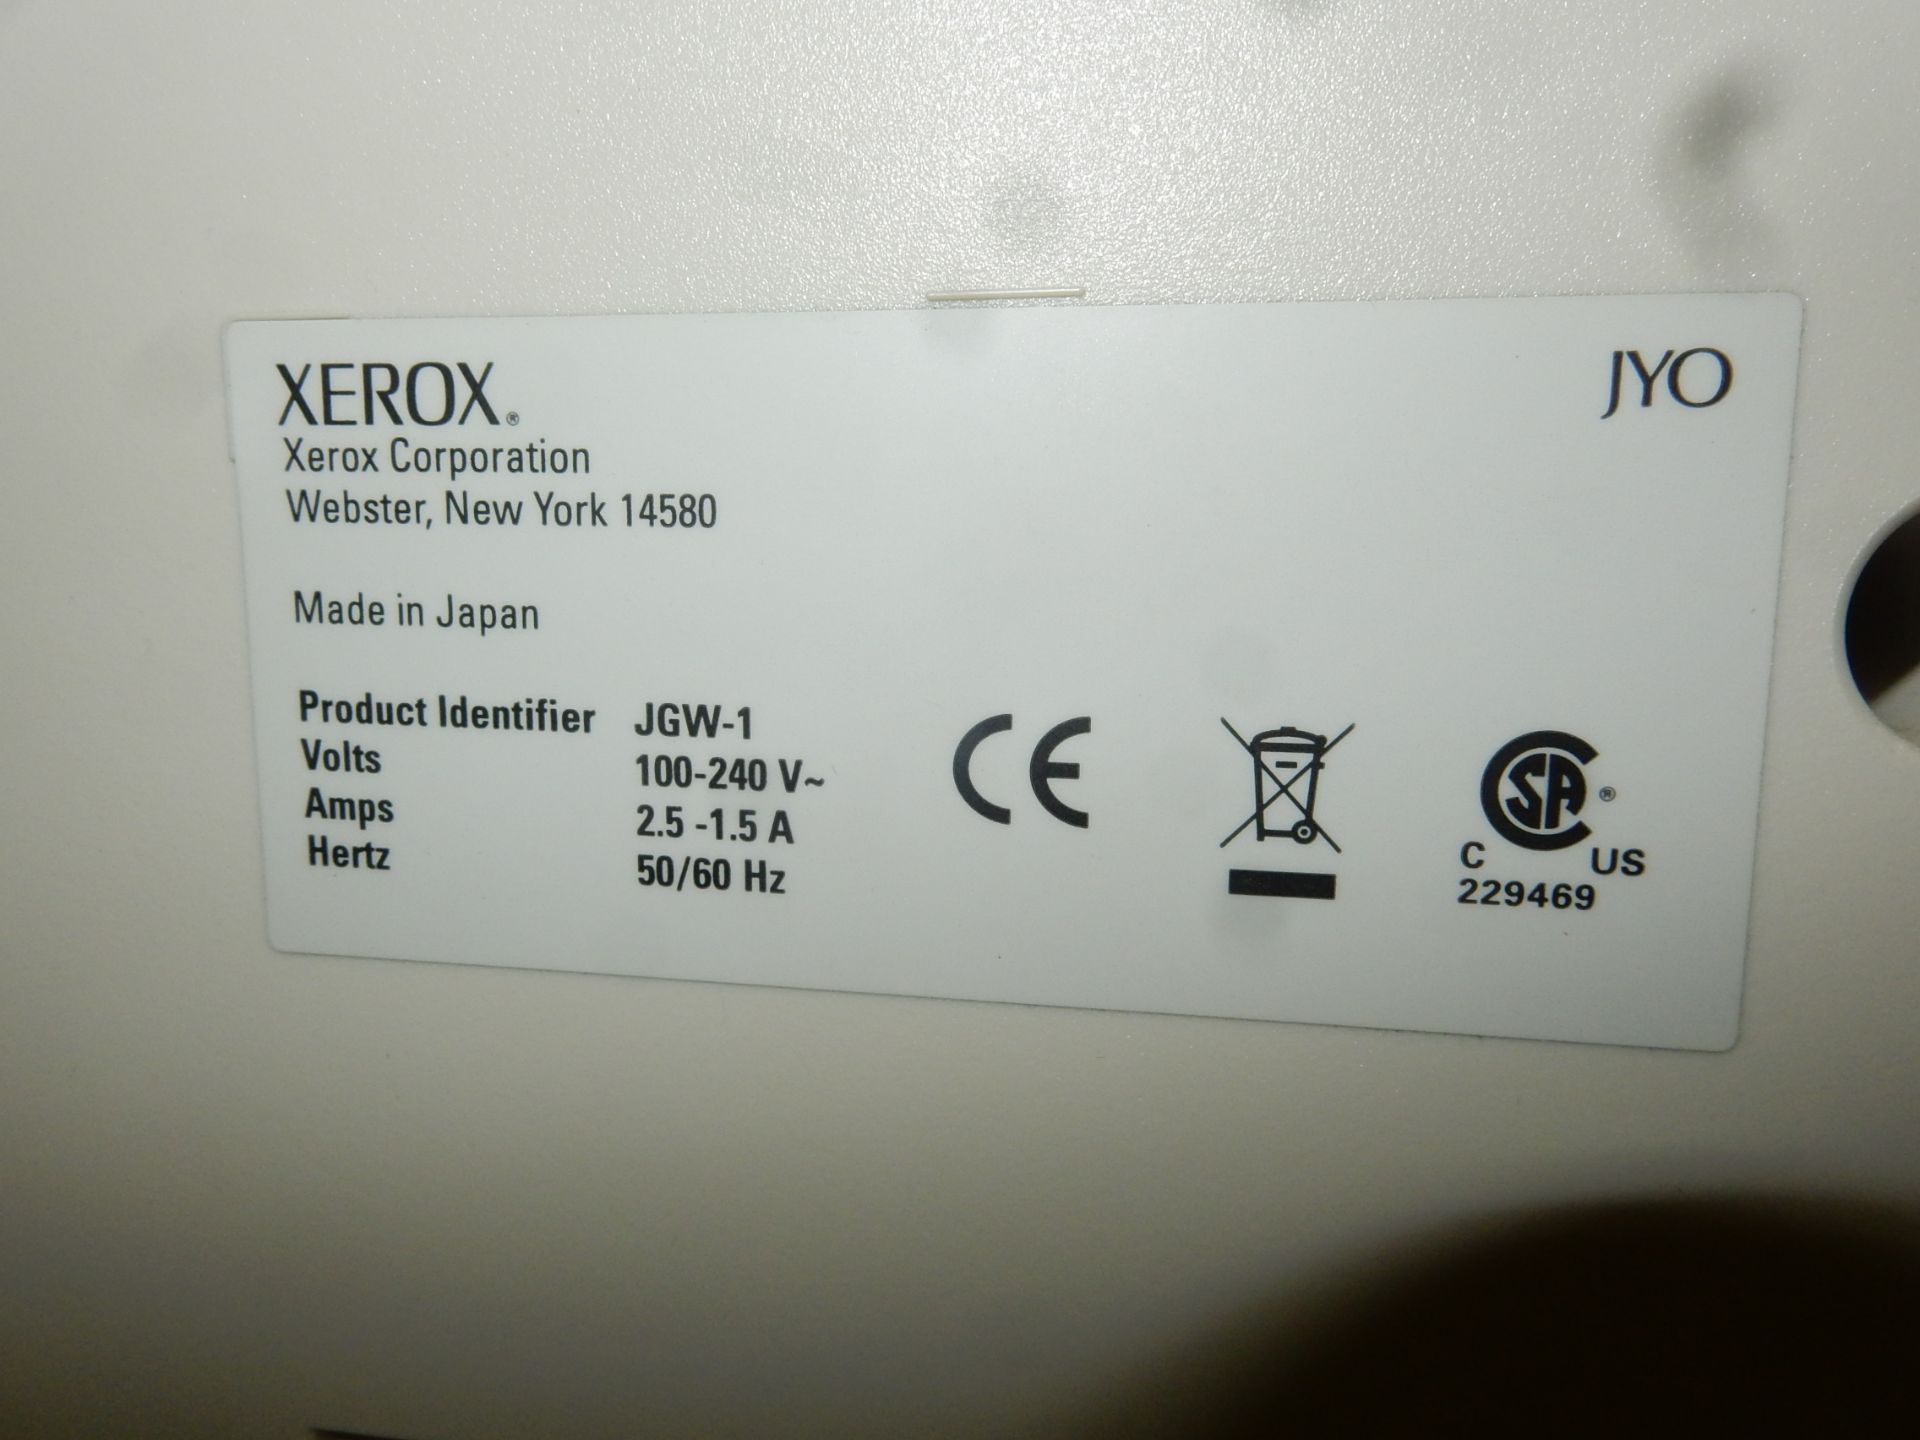 XEROX 700i DIGITAL COLOR PRESS, PROD. IDENTIFIER # F3B-1, EX700i CONTROL CONSOLE - Image 4 of 5